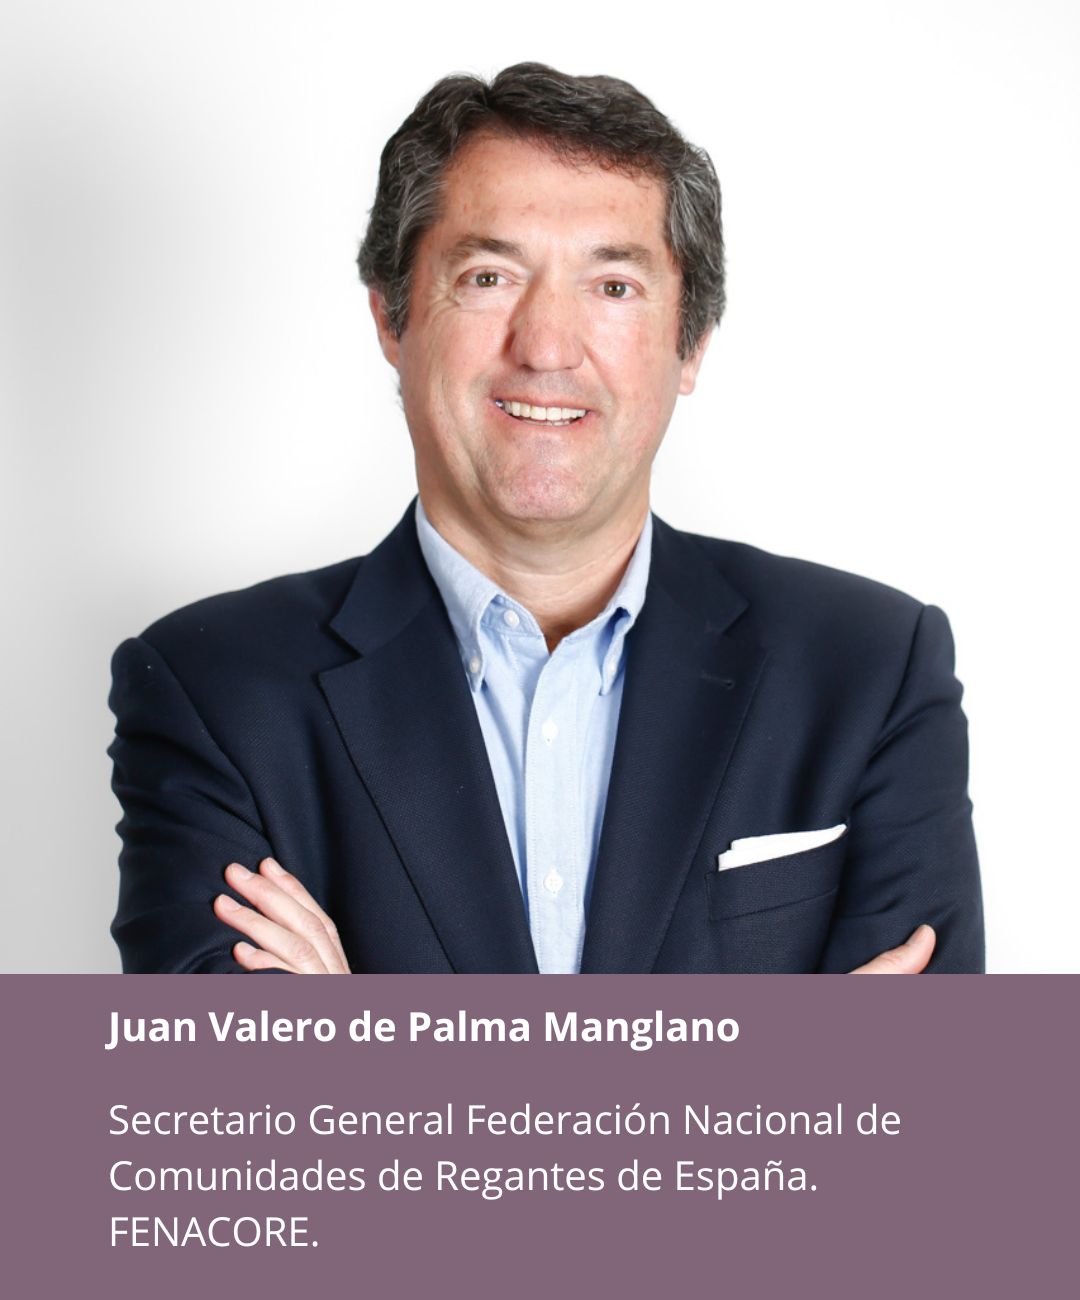 Juan Valero de Palma